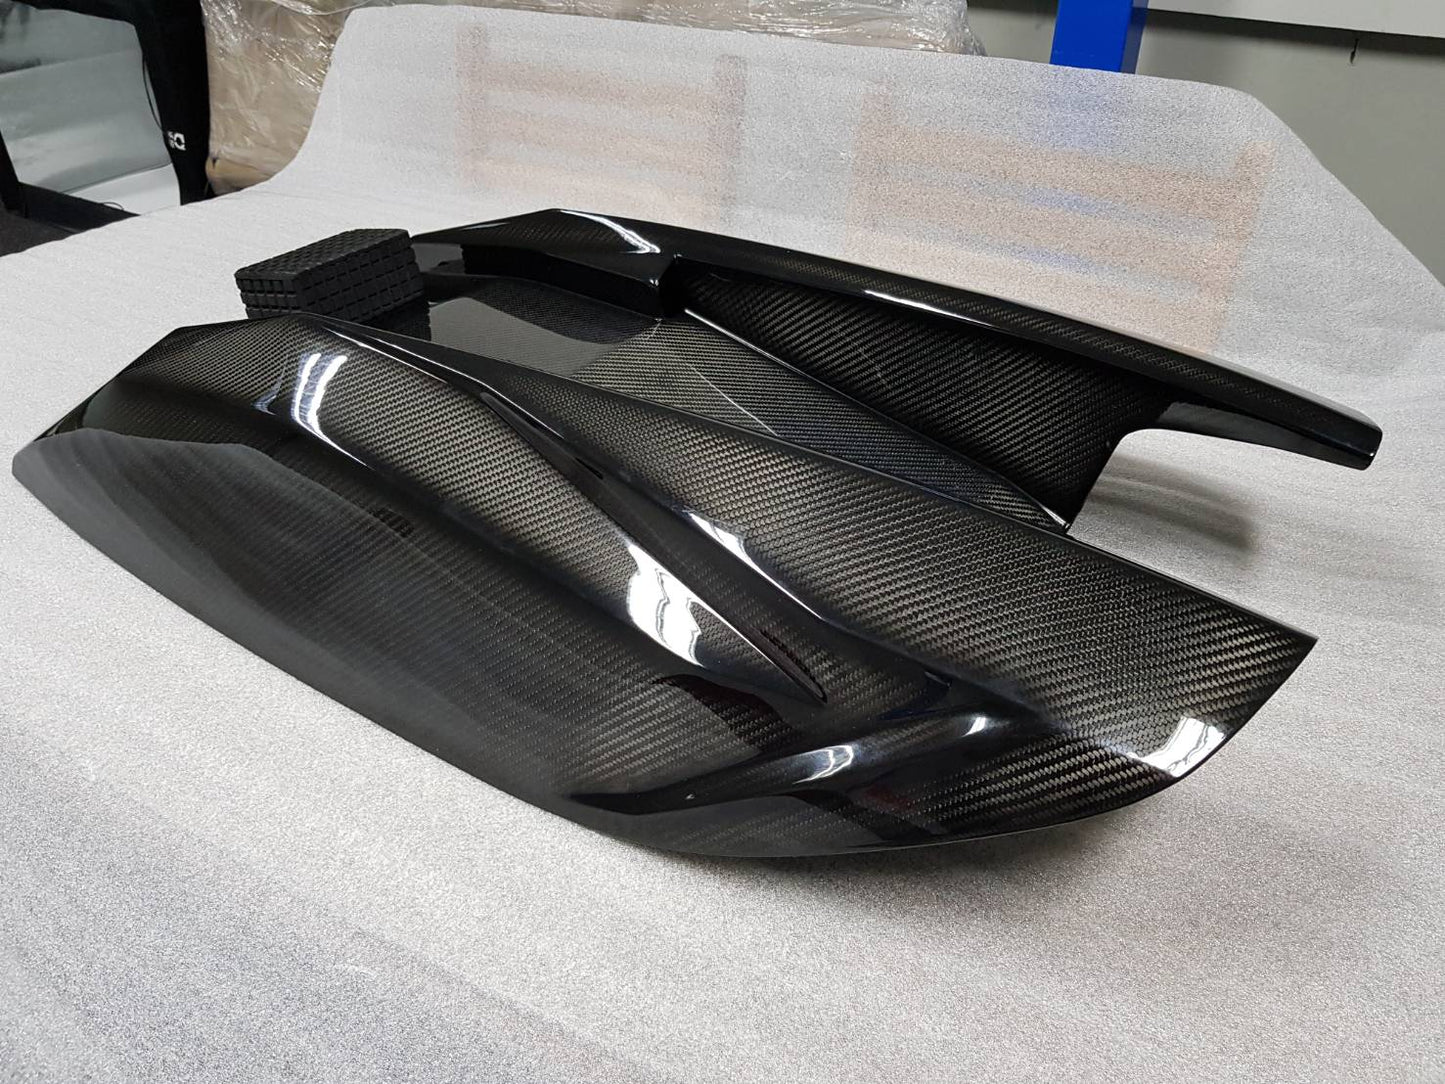 VK Composites Kawasaki SXR 1500 Carbon Hood